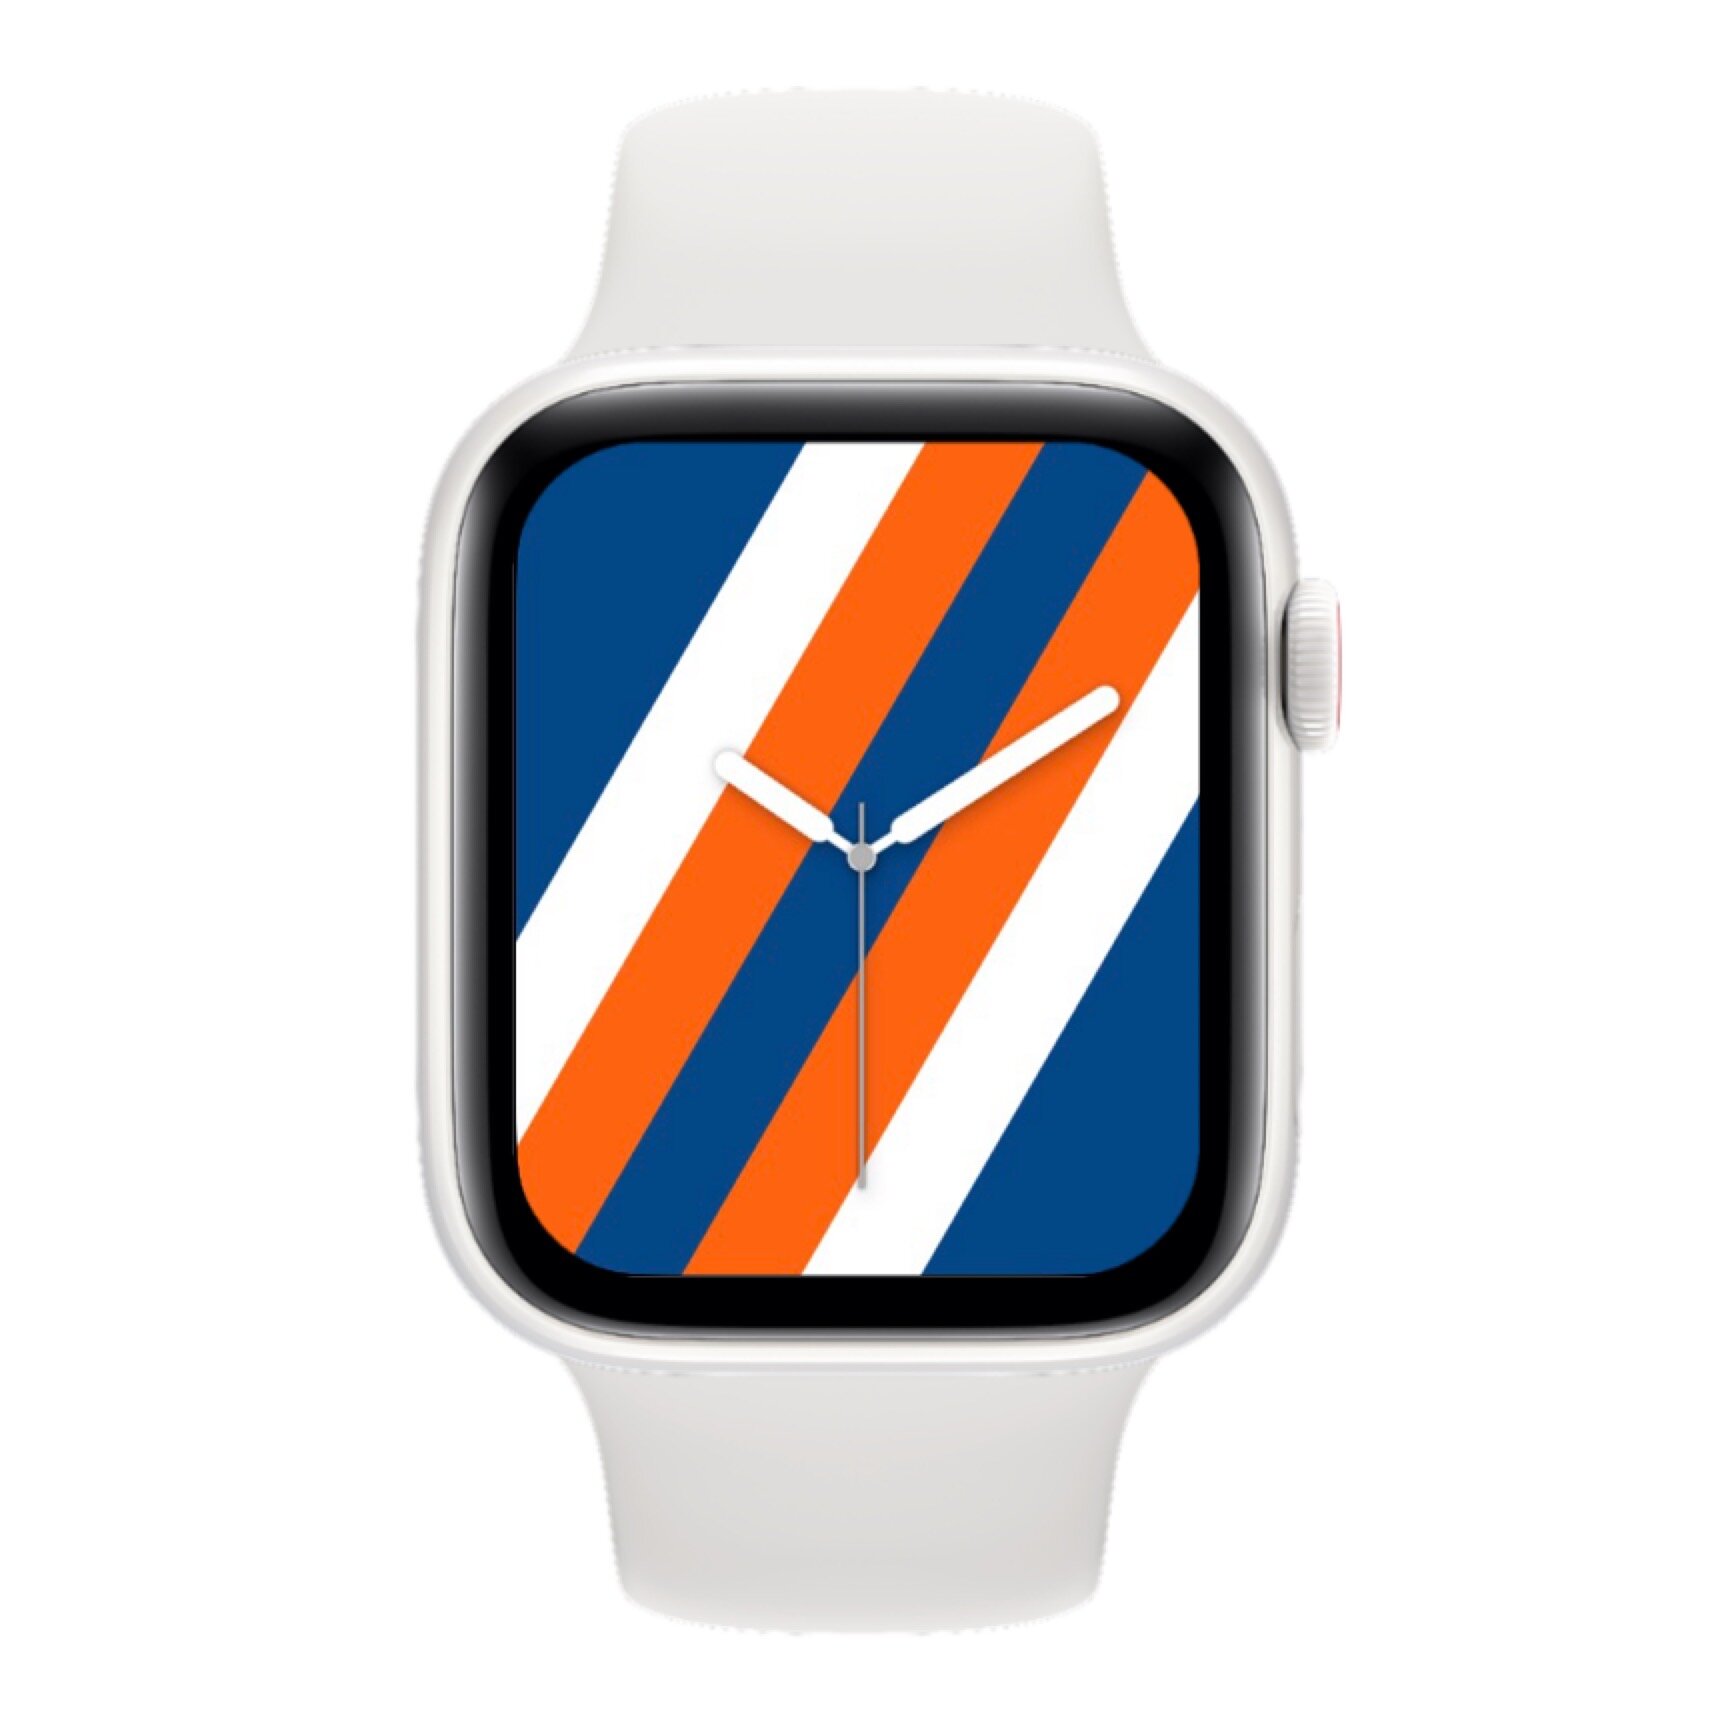 New York Islanders (NHL) Apple Watch face design, Add this …